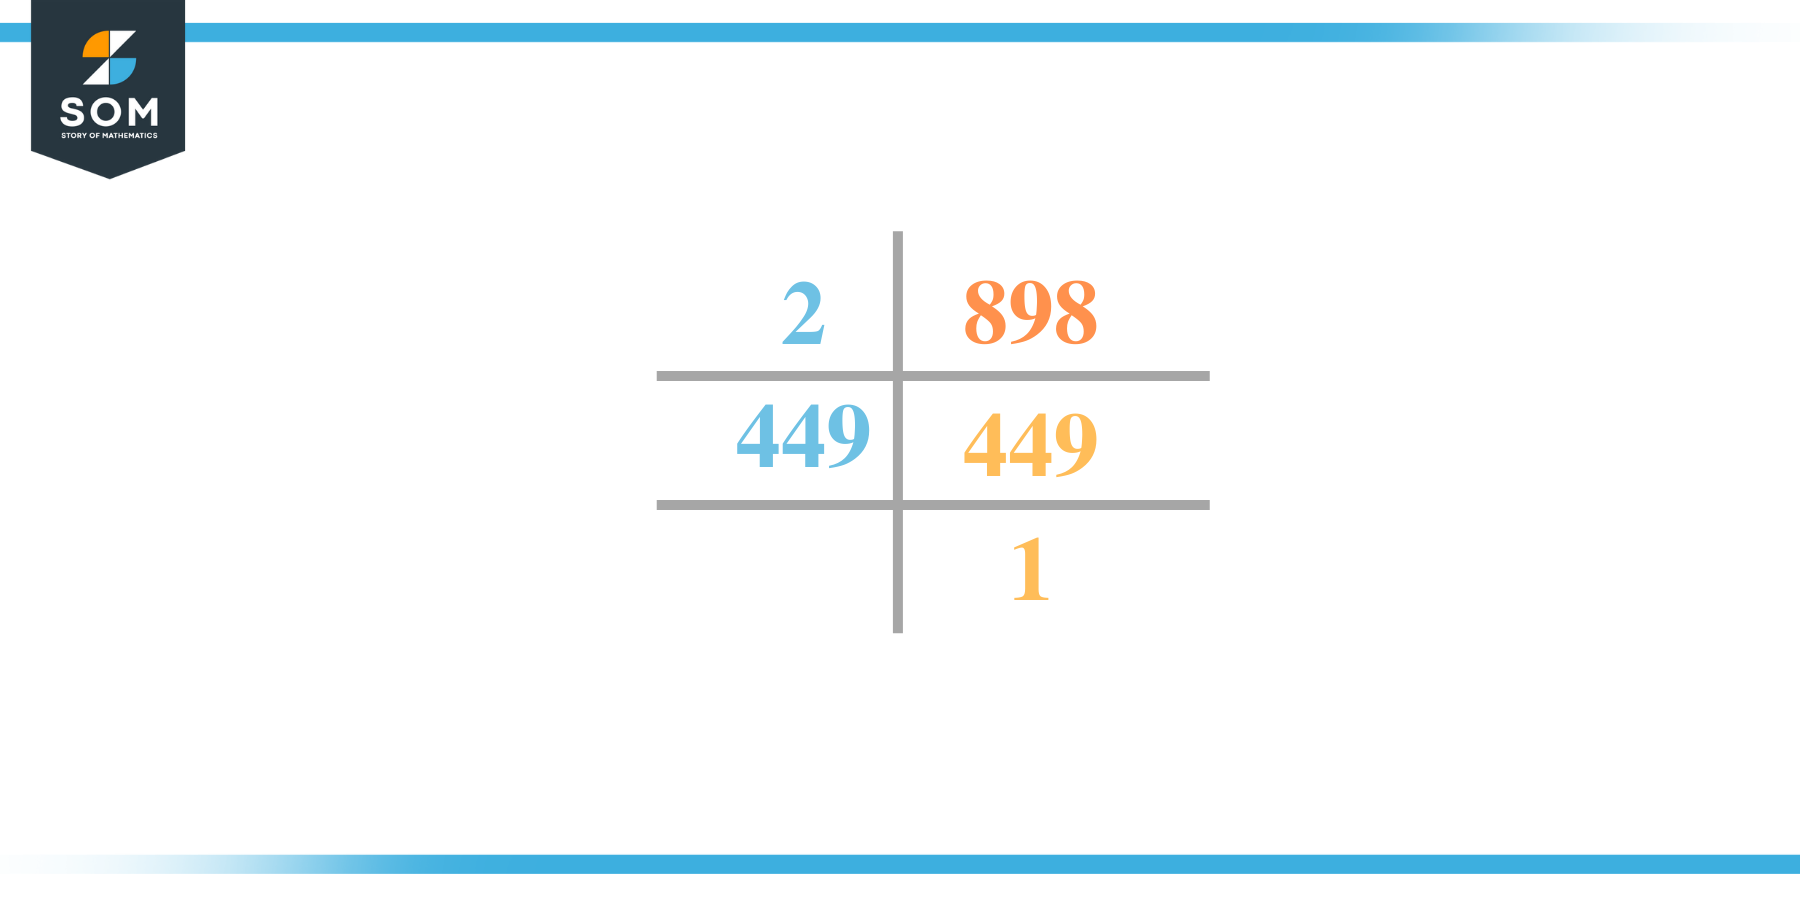 Prime factorization of 898